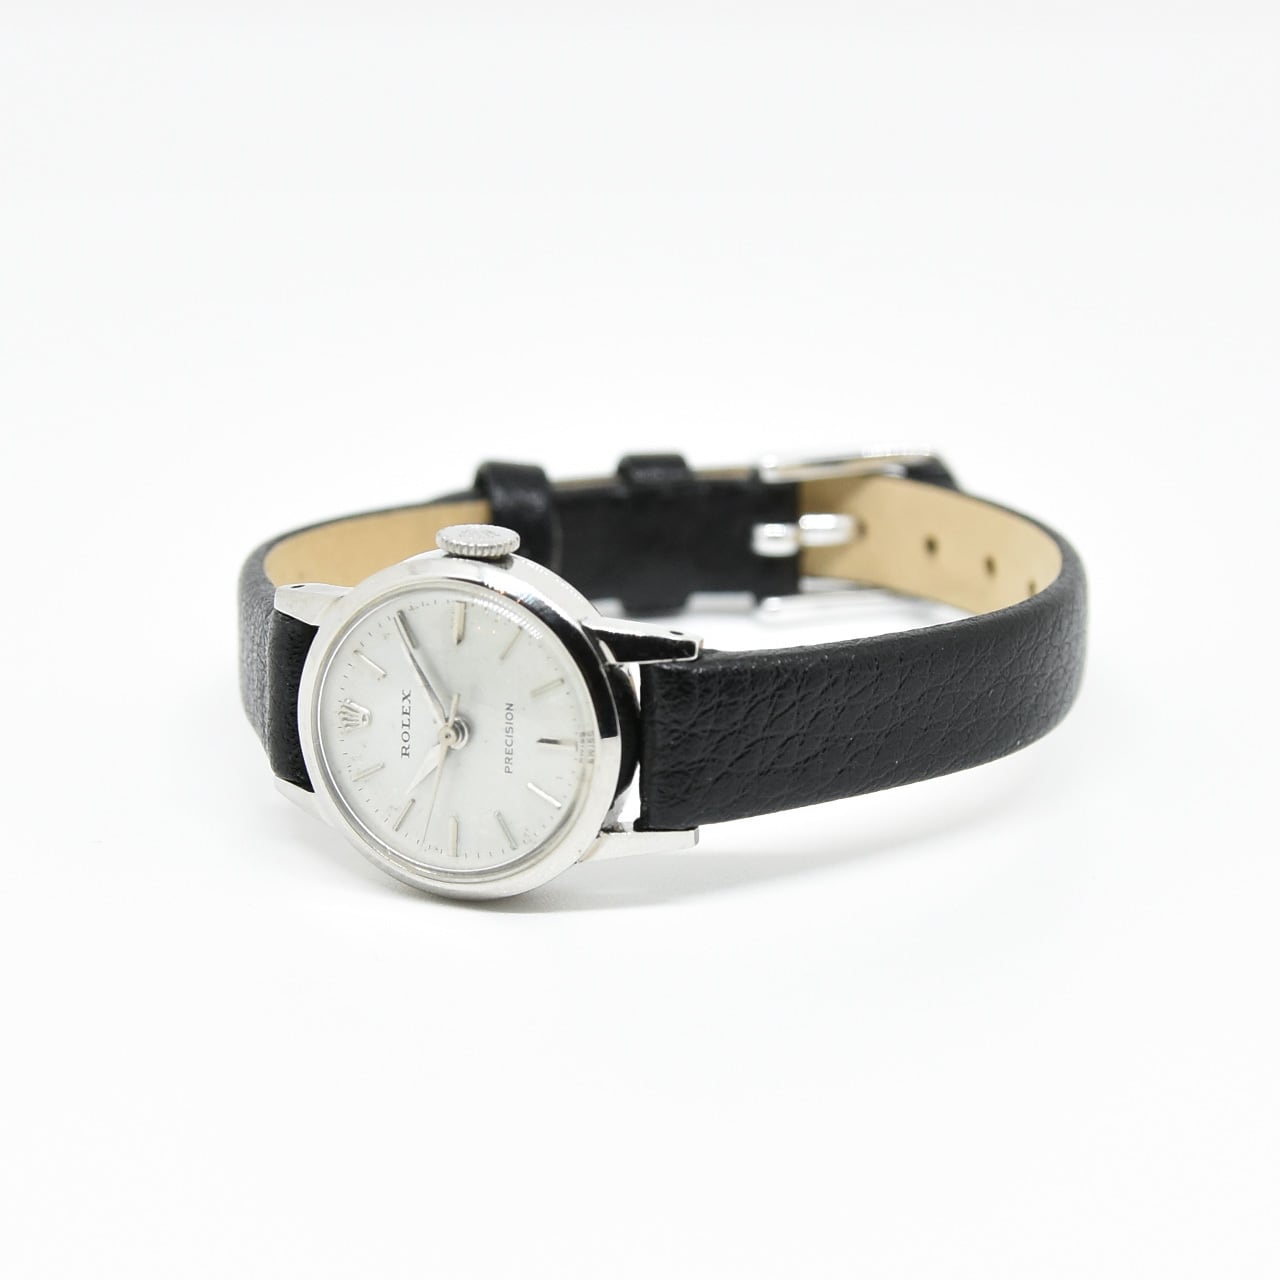 1960's ROLEX PRECISION Vintage Watch / ロレックス プレシジョン ヴィンテージ ウォッチ (手巻き式) / #104021